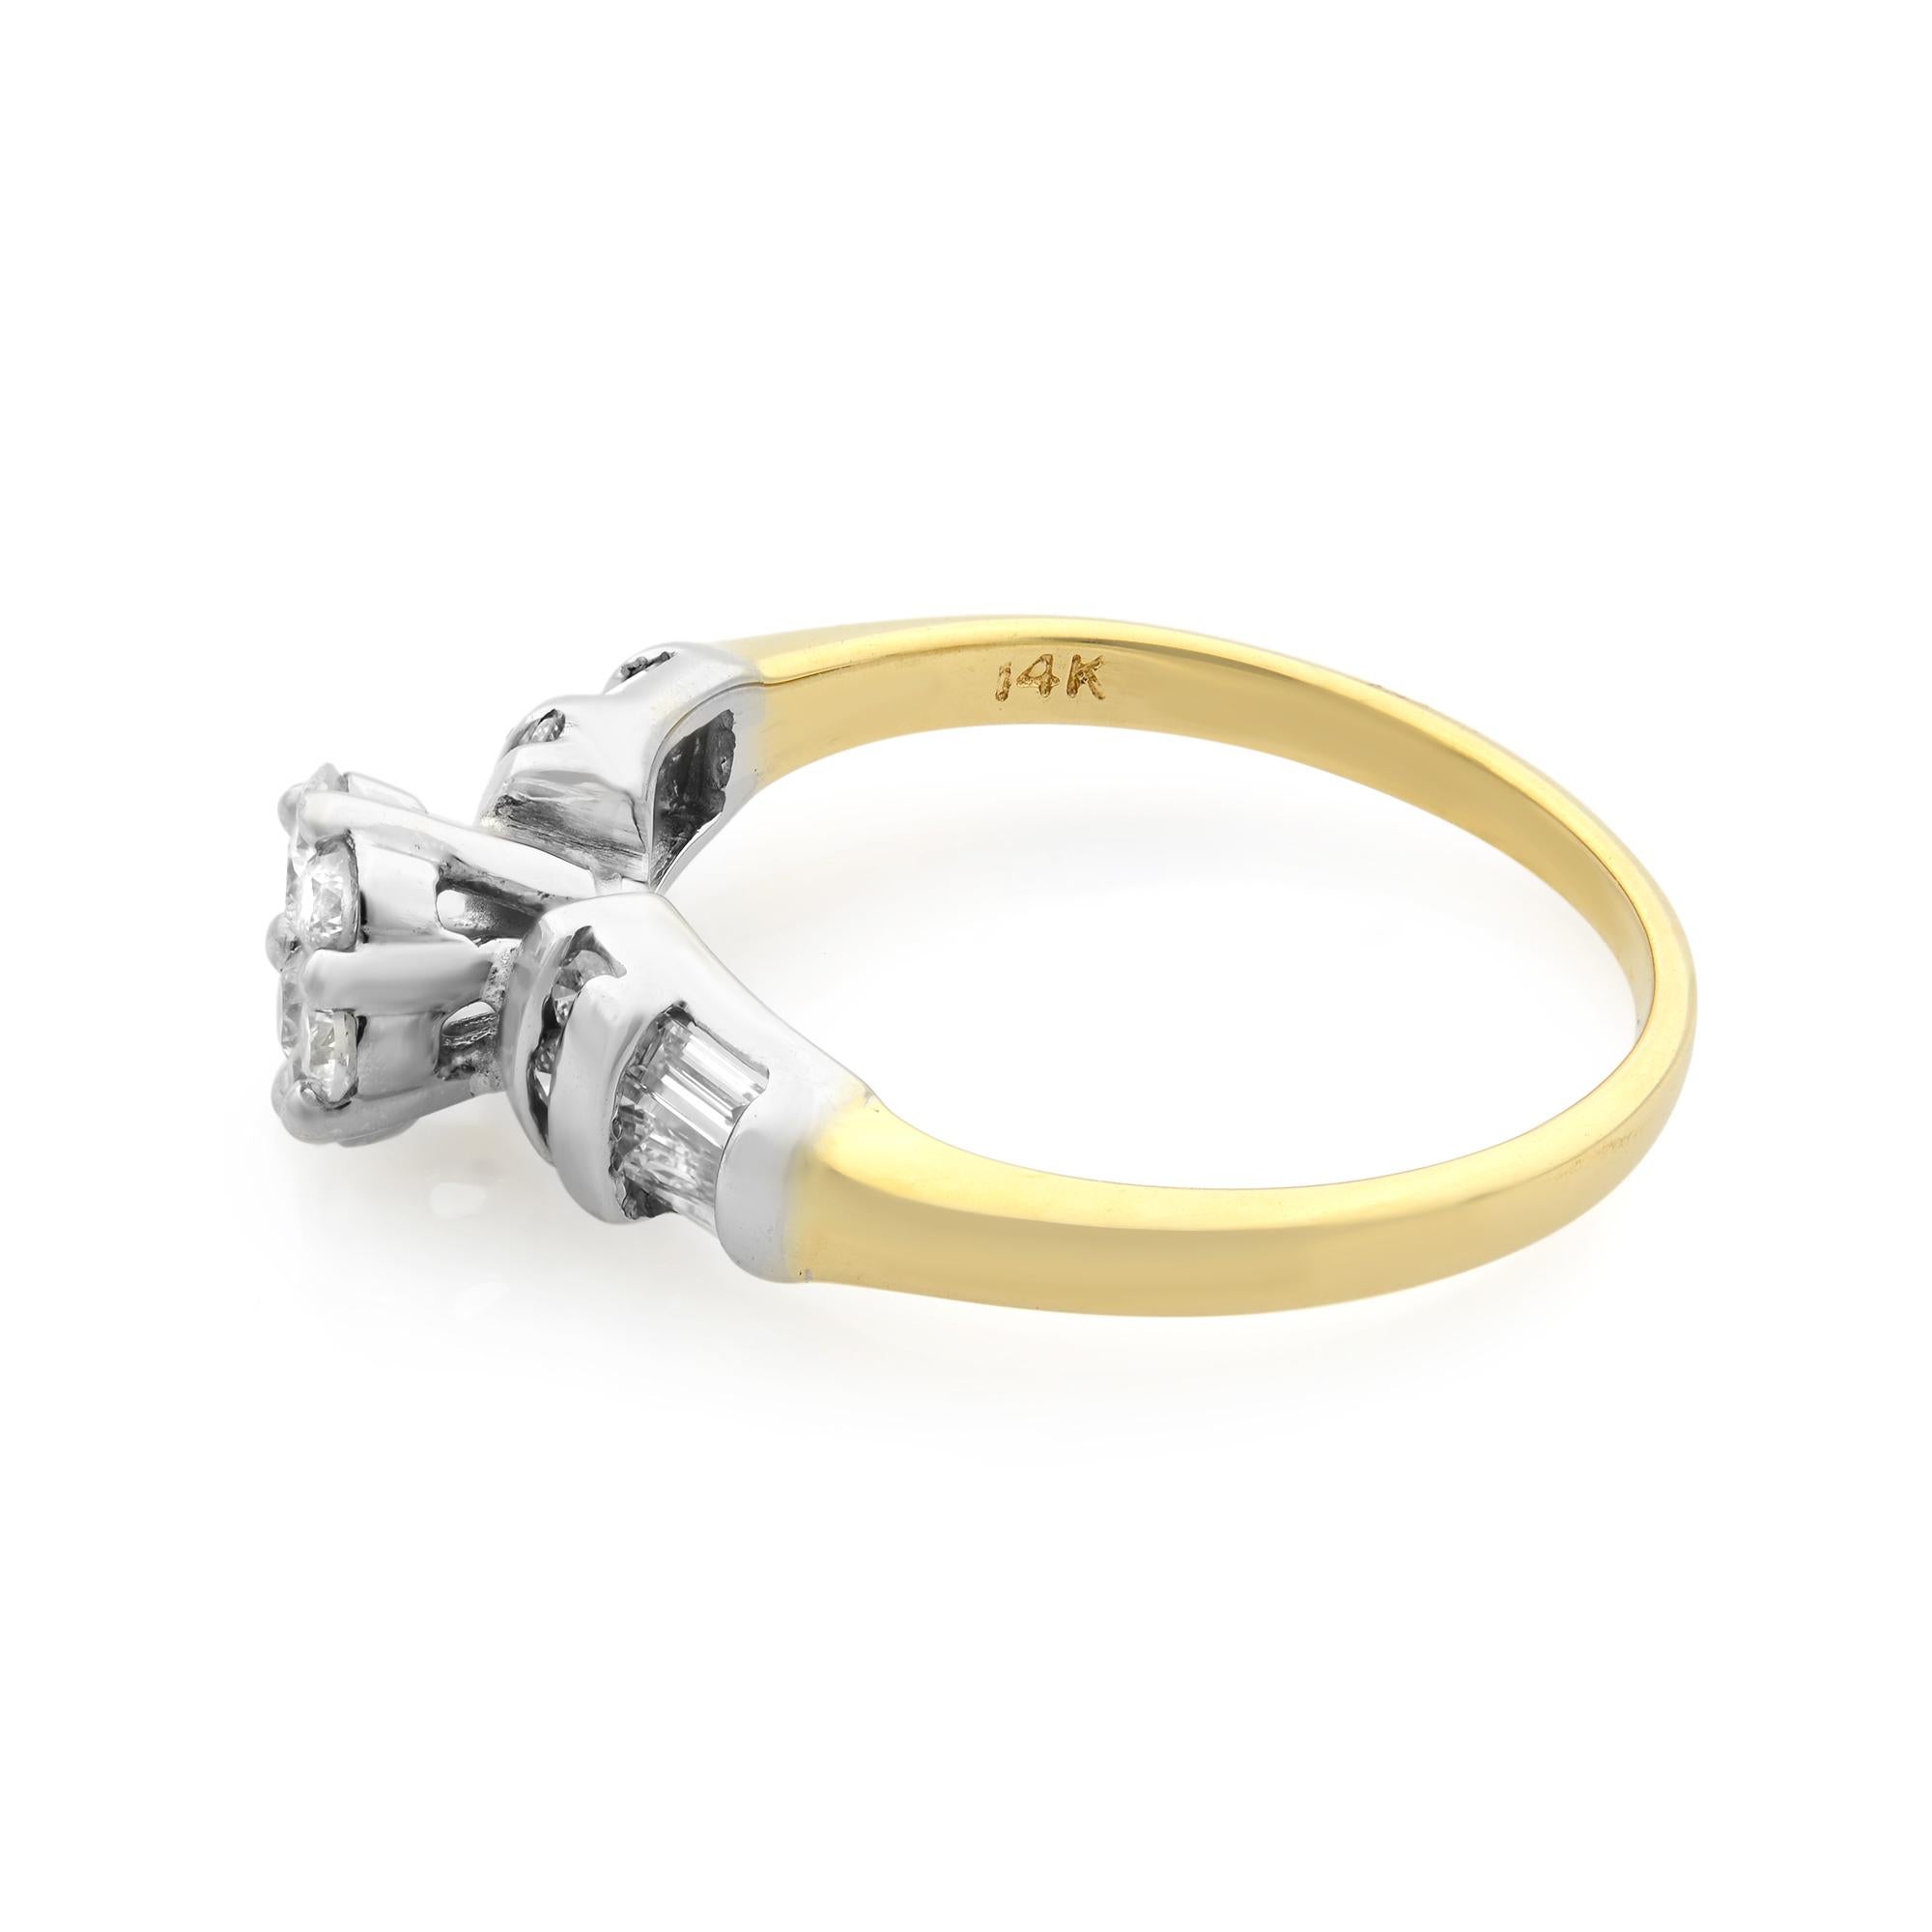 Round Cut Rachel Koen Diamond Wedding Ring 14K White and Yellow Gold 0.25cttw For Sale